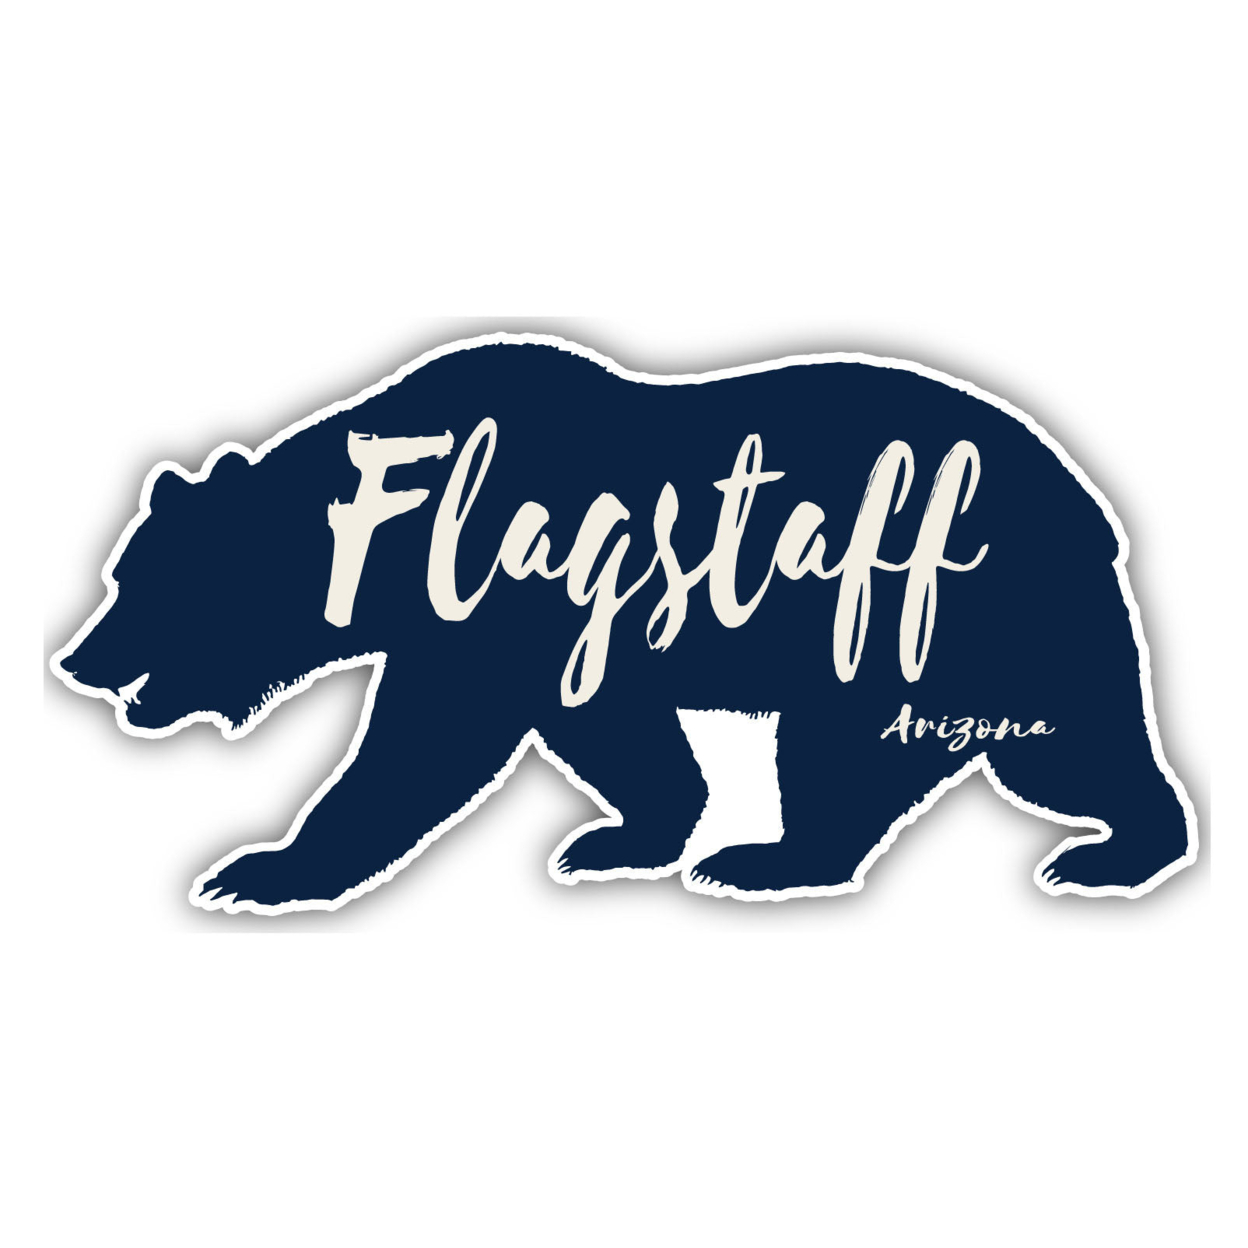 Flagstaff Arizona Souvenir Decorative Stickers (Choose Theme And Size) - Single Unit, 6-Inch, Camp Life